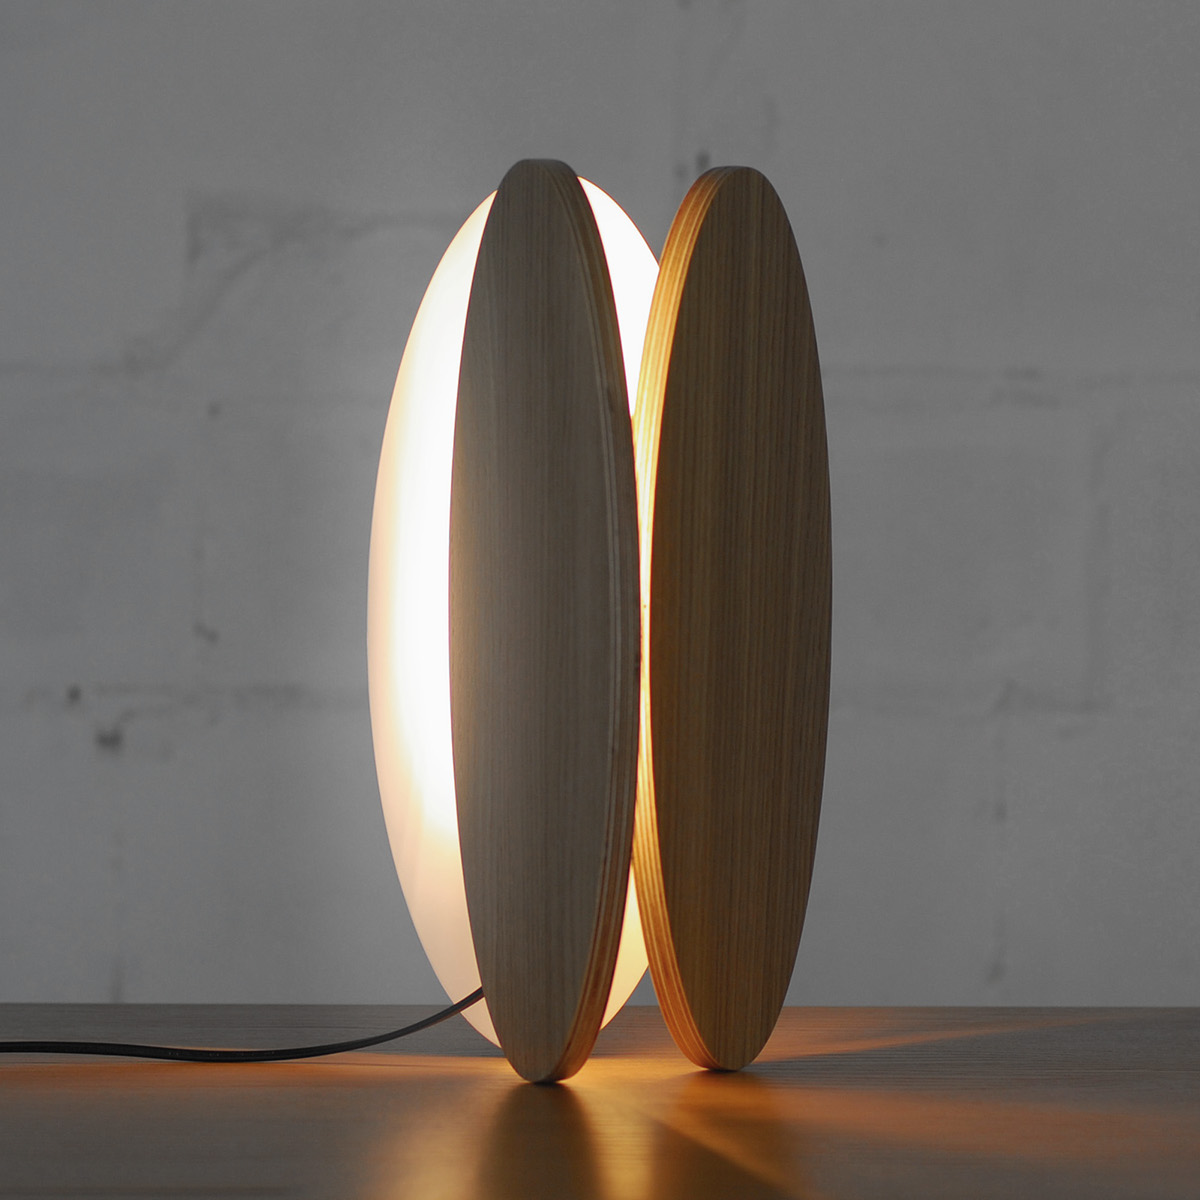 odesd2 design furniture Lamp lightning lamps Ova plywood wood minimal